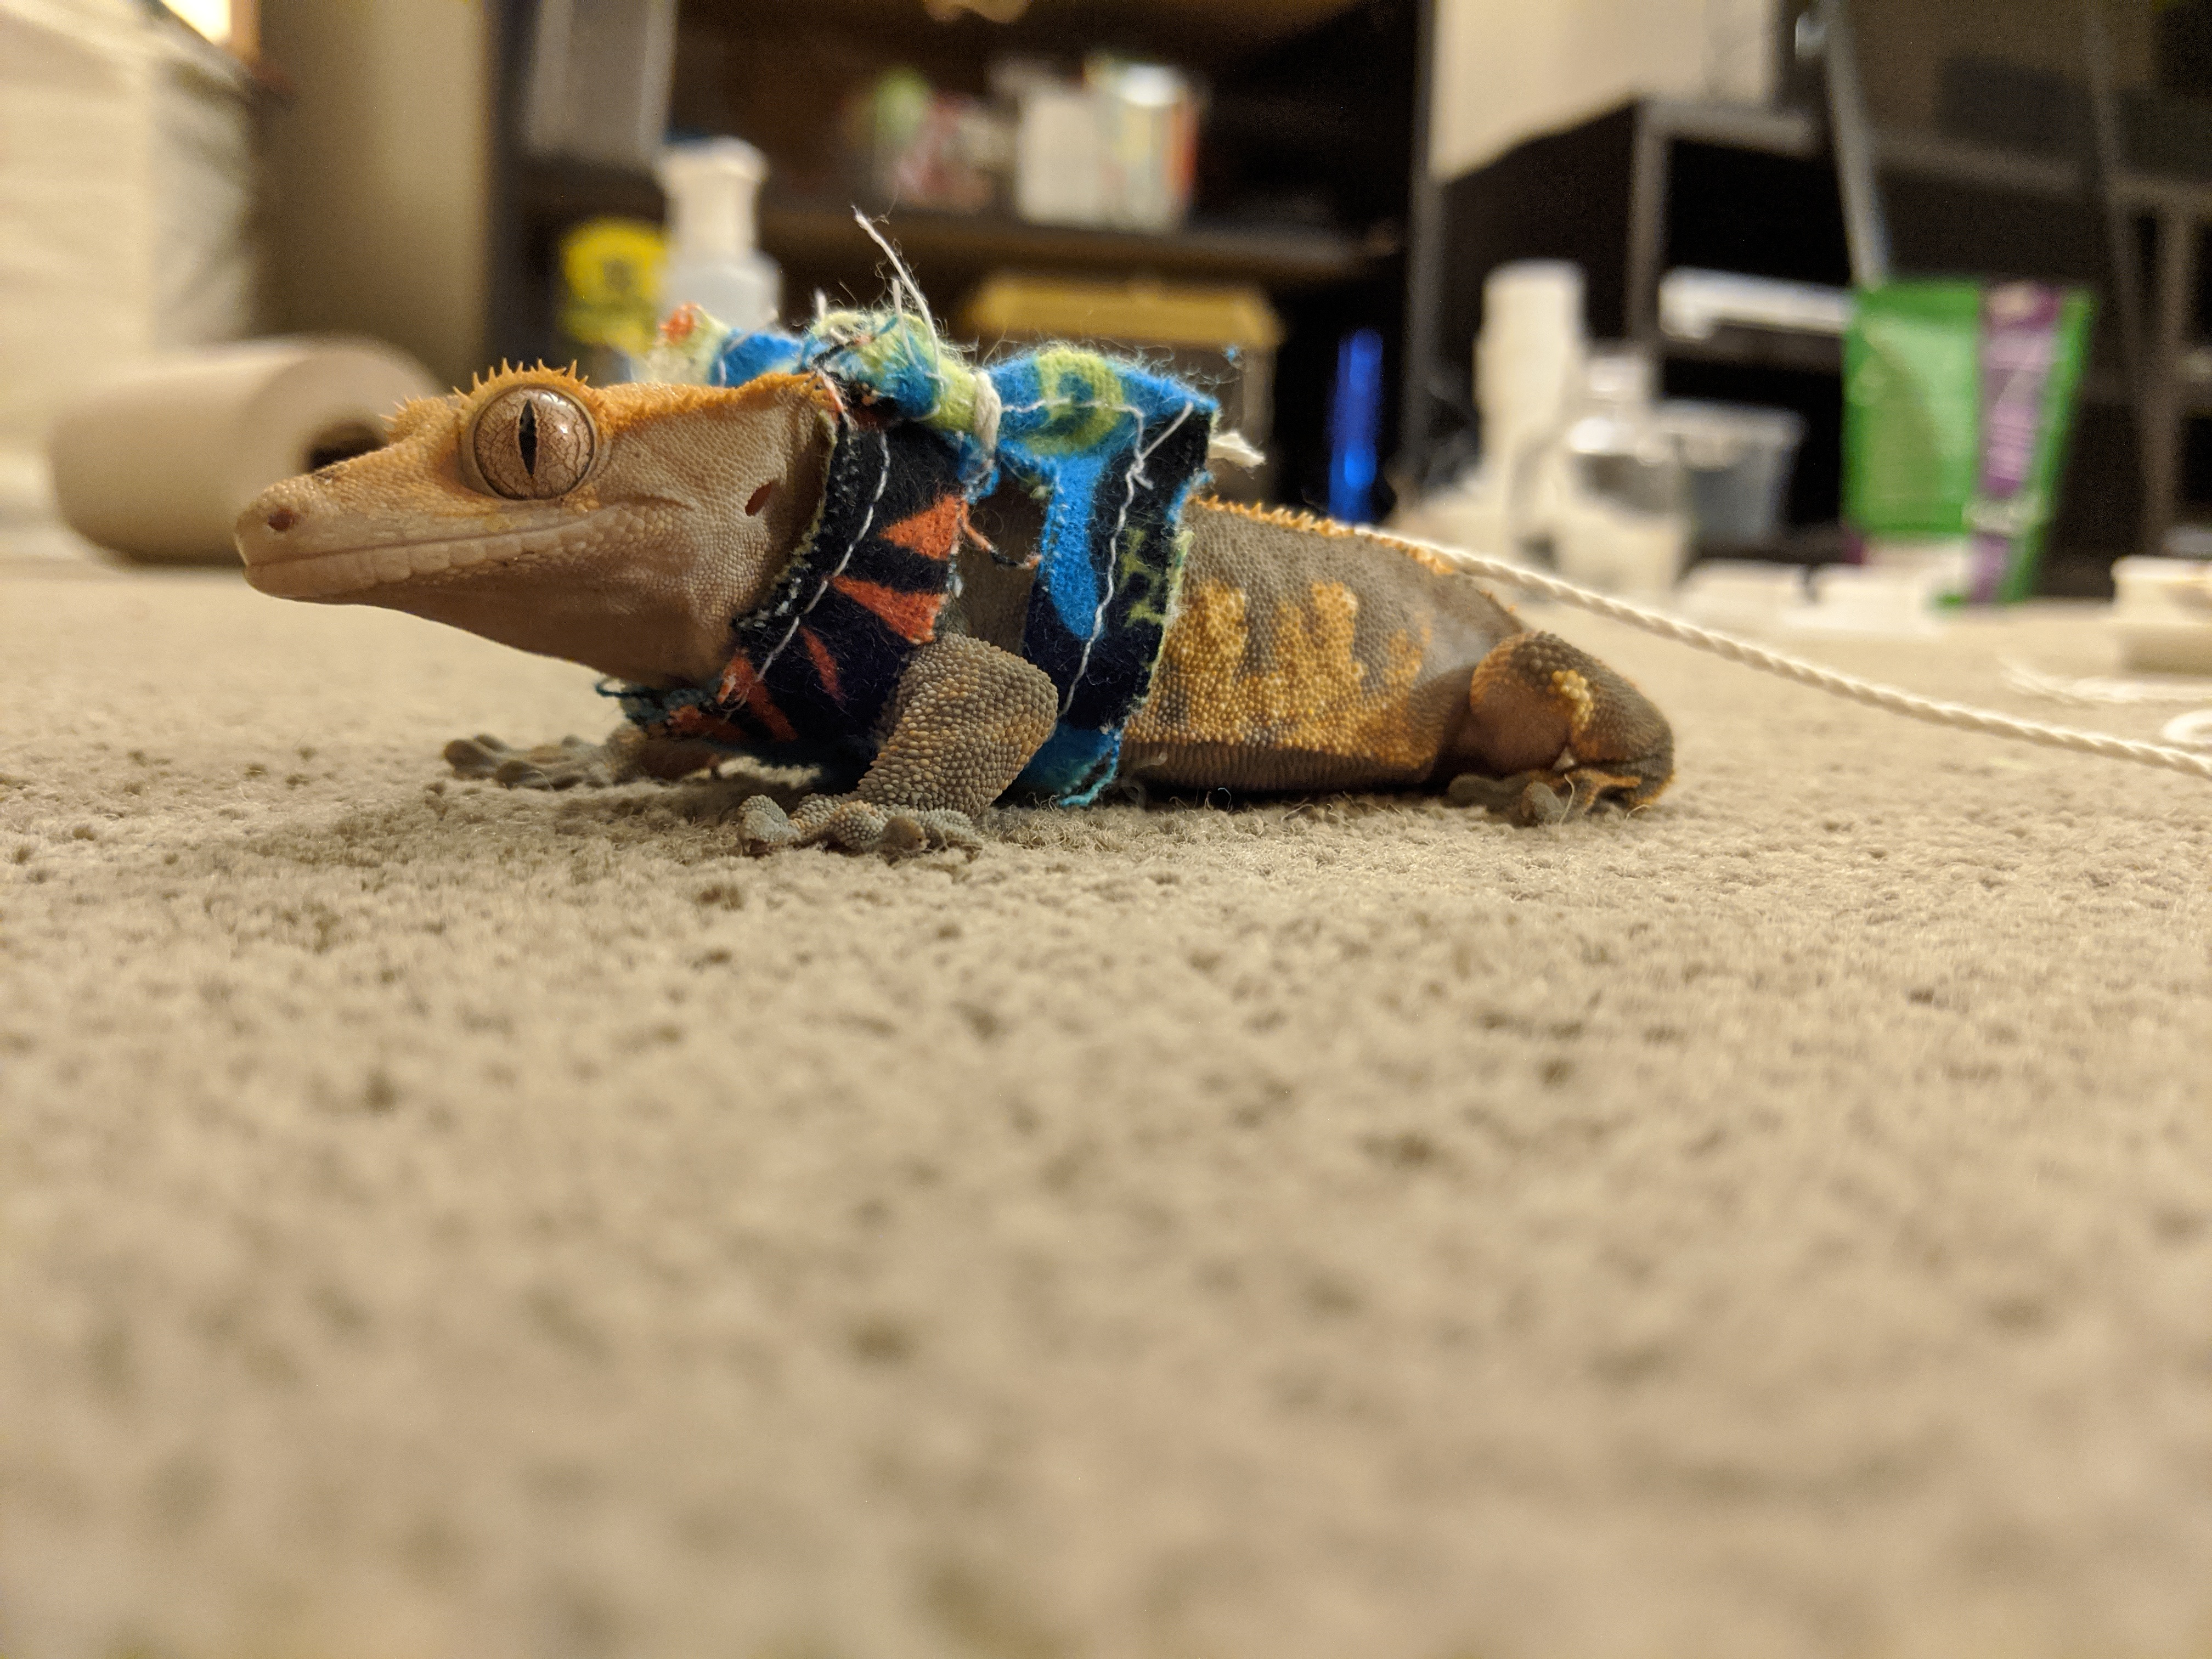  my gecko with a jacket